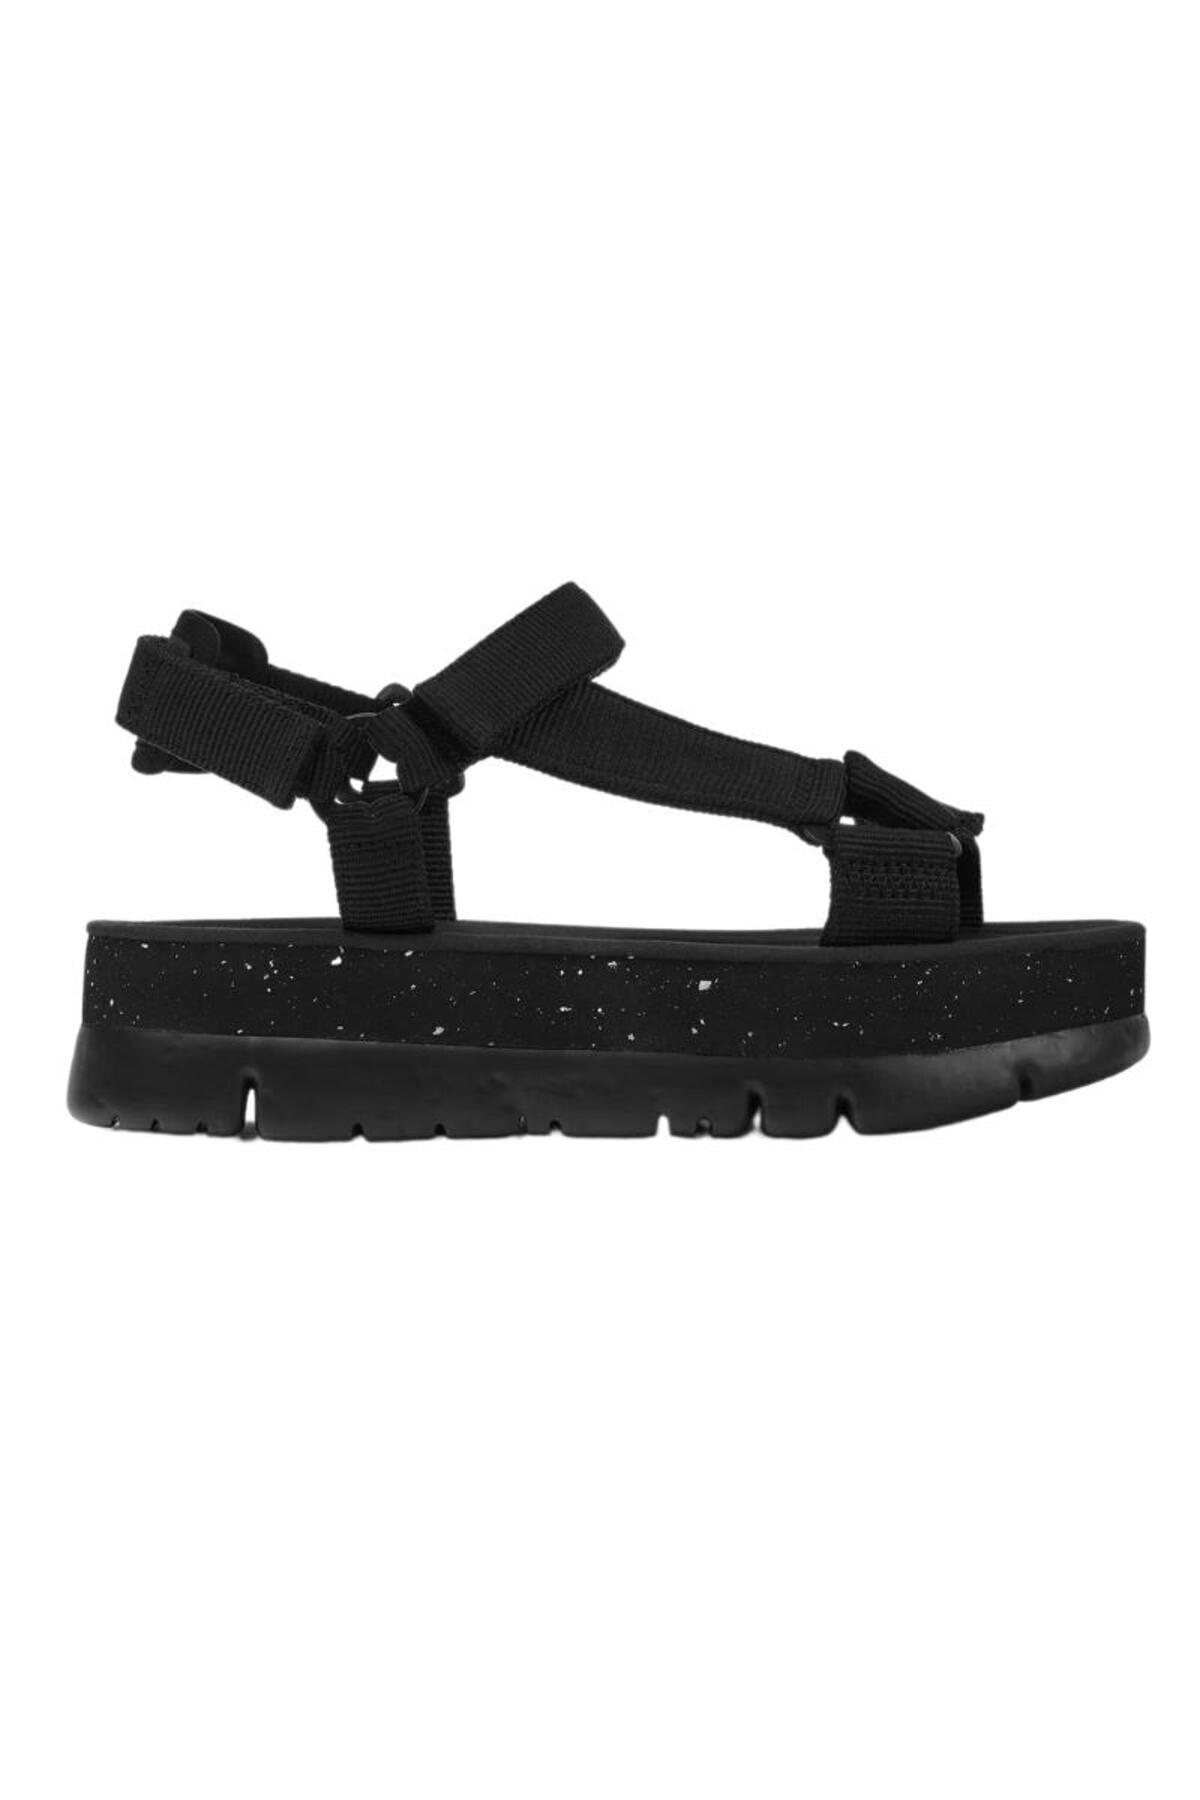 CAMPER Kadın Siyah Casual Ayakkabı K200851-004-siyah